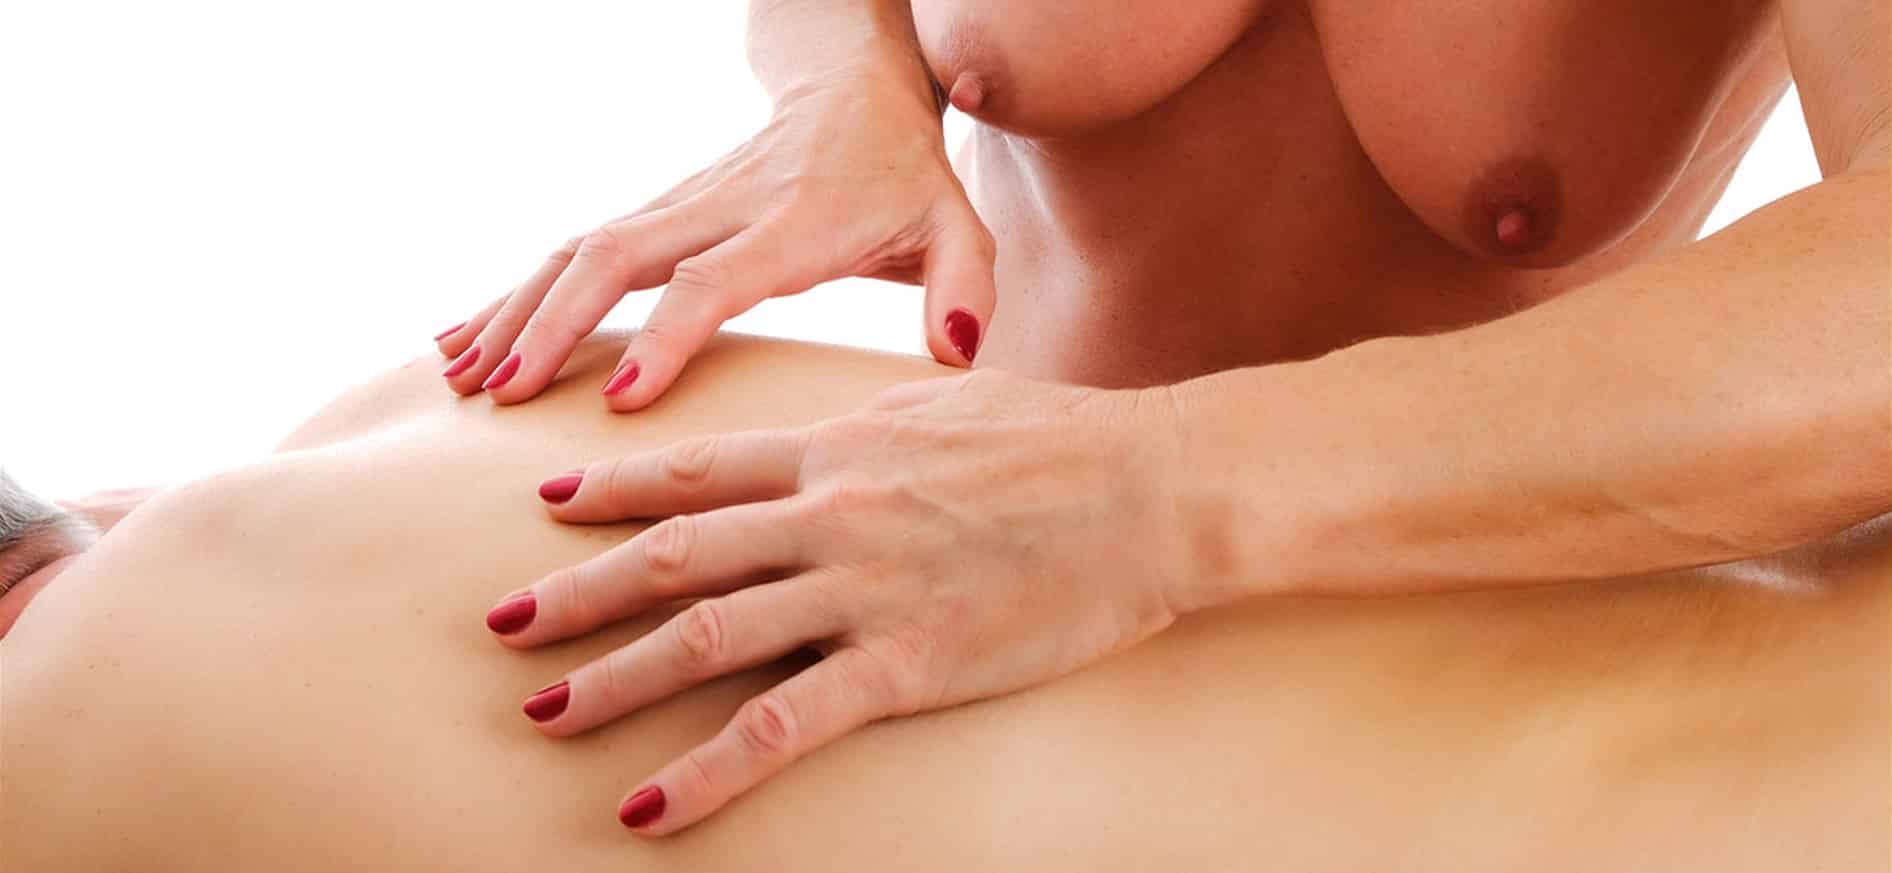 Massagem Relaxante Erotica nude photos